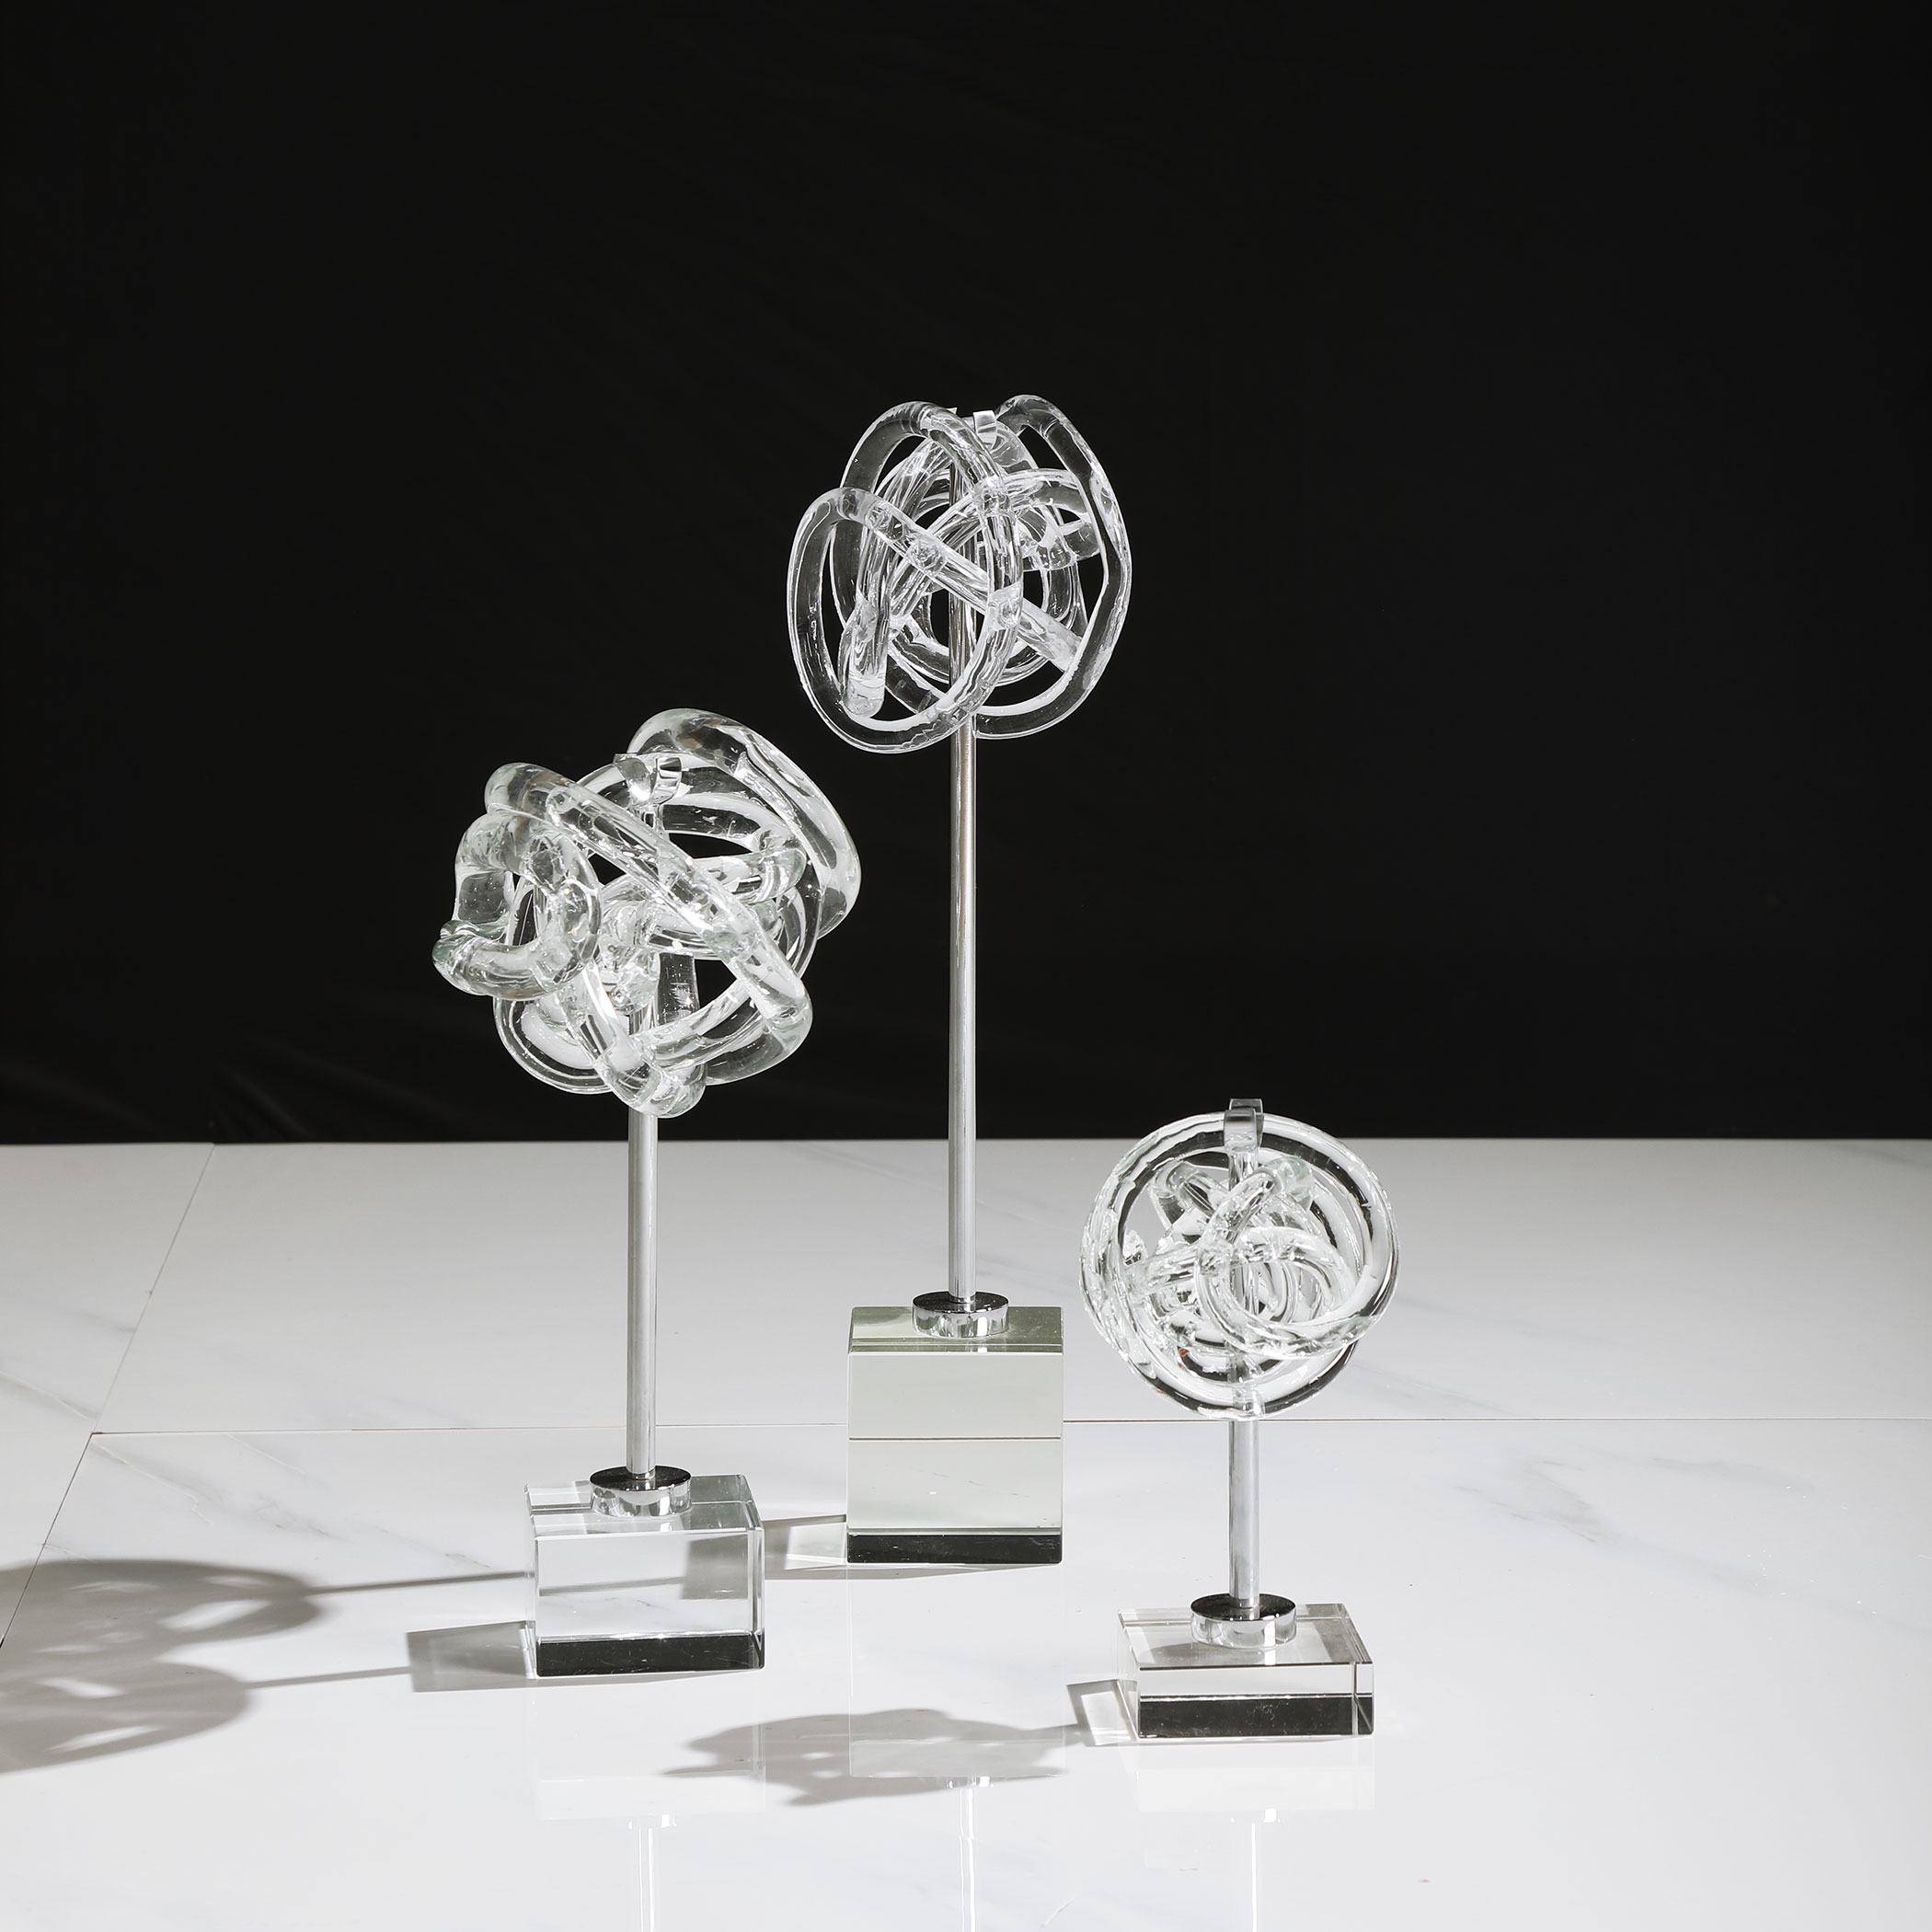 Neuron Glass Table Top Sculptures, S/3 - Image 0